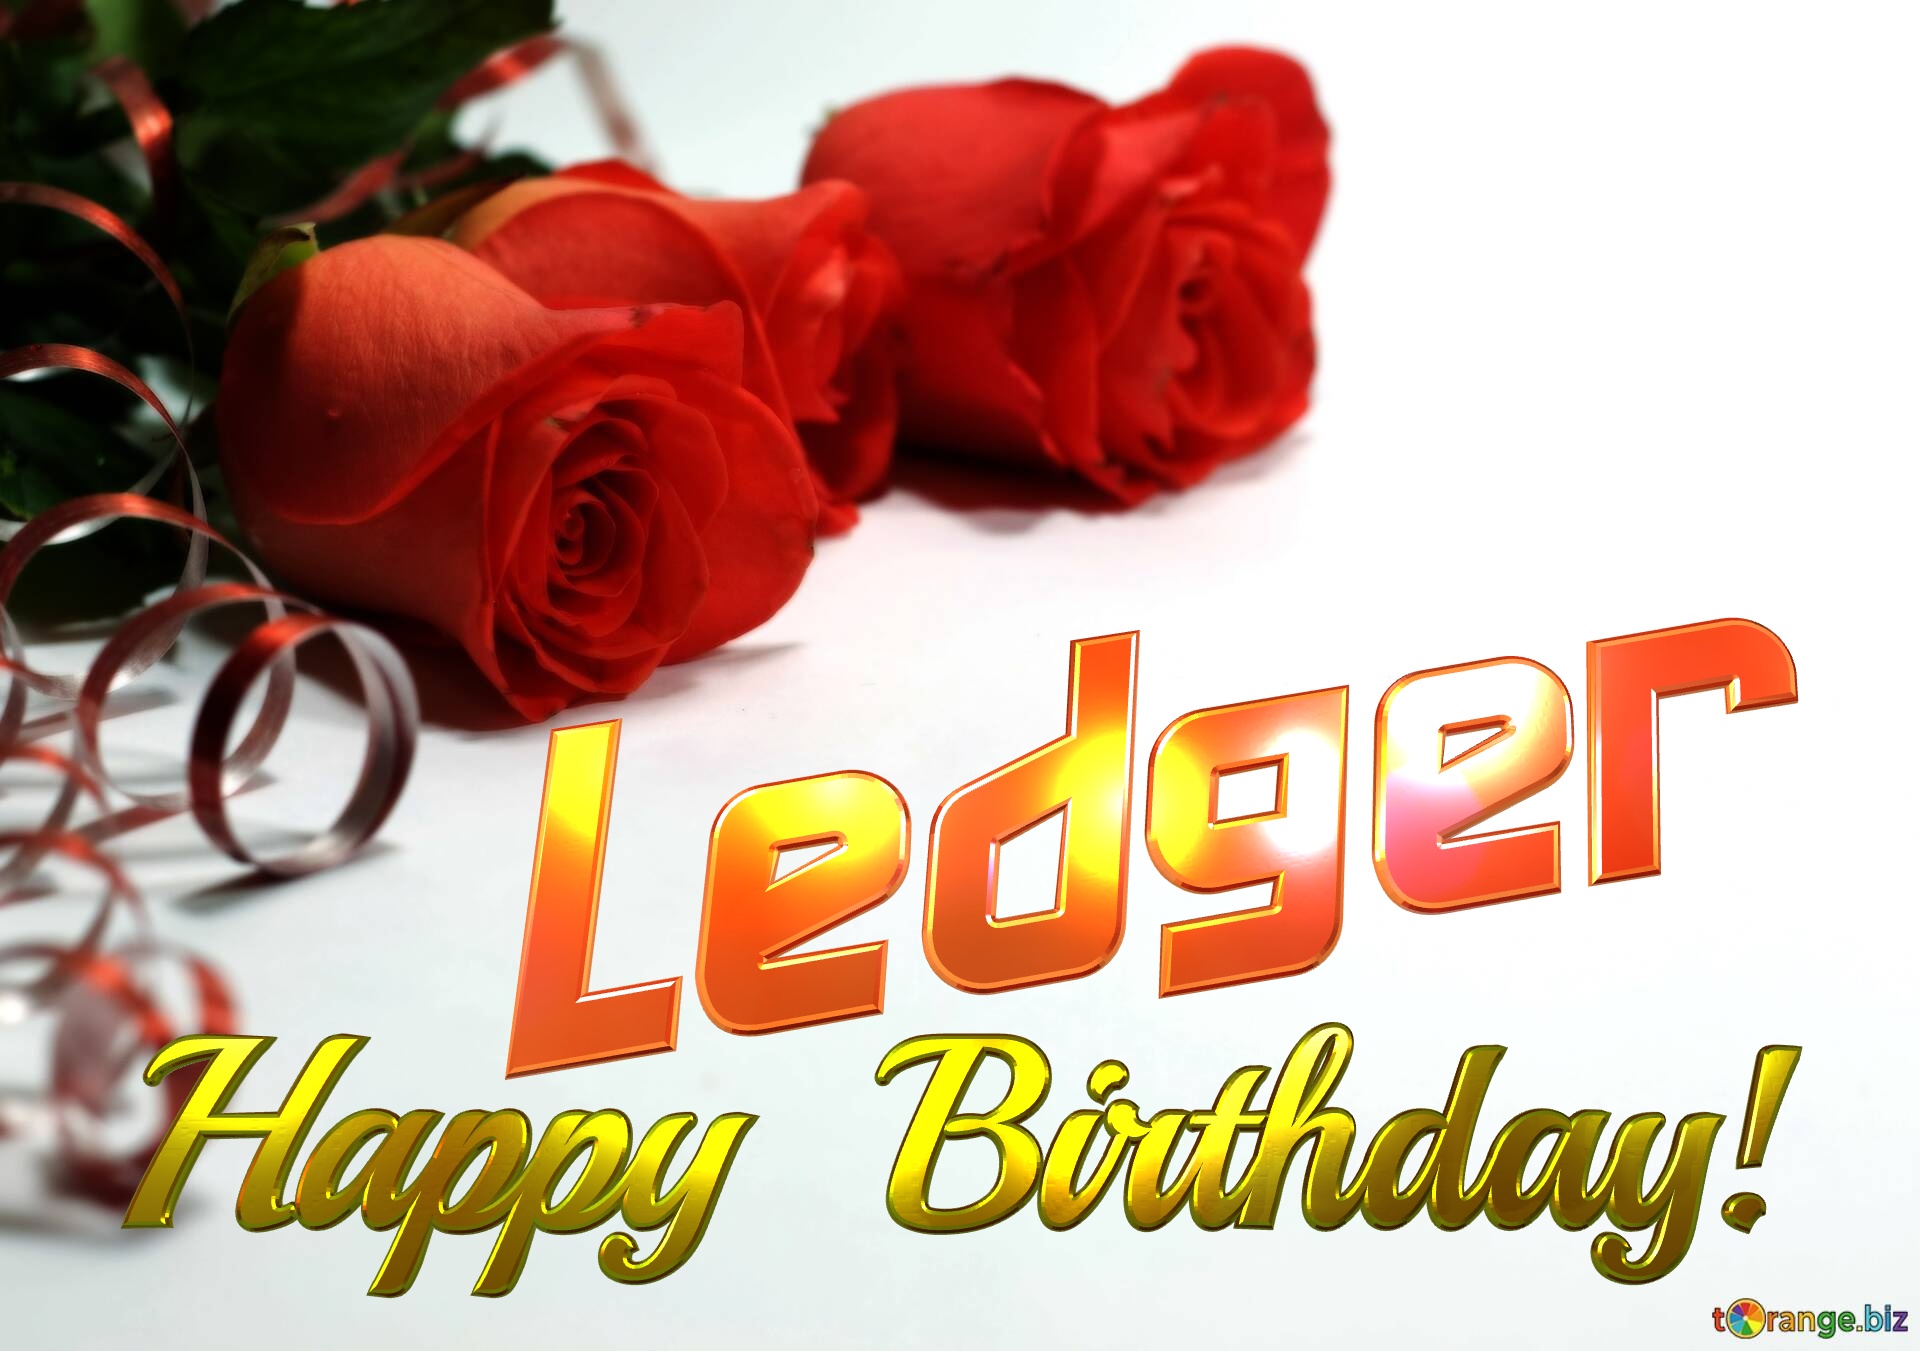 Ledger   Birthday   Wishes background №0